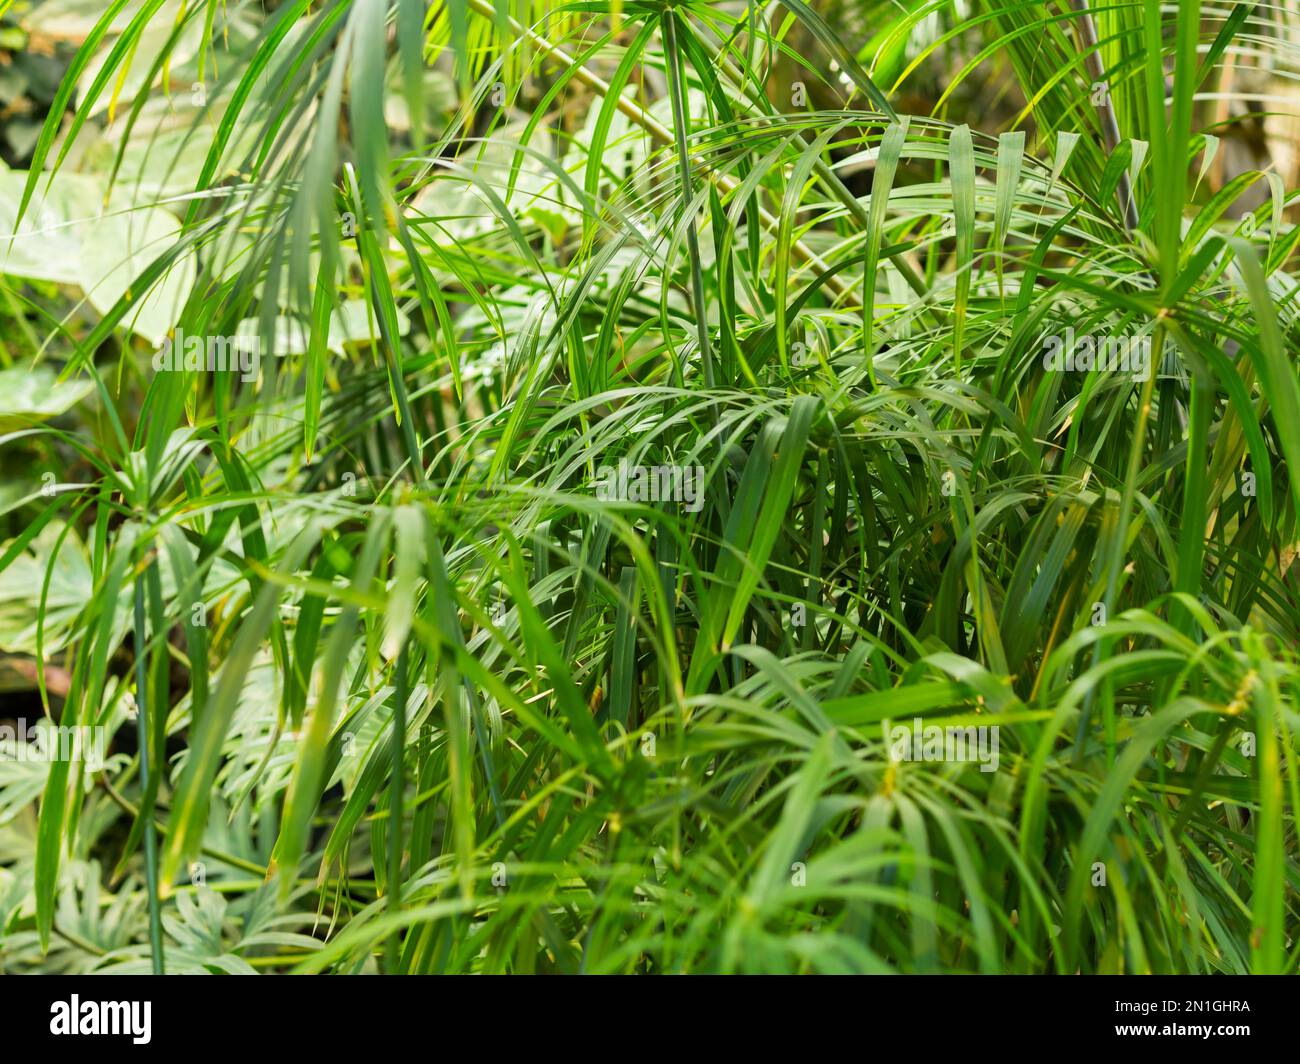 Full framed photo of Cyperus alternifolius, umbrella papyrus, umbrella sedge or umbrella palm. Green foliage of a grass-like plant. Stock Photo